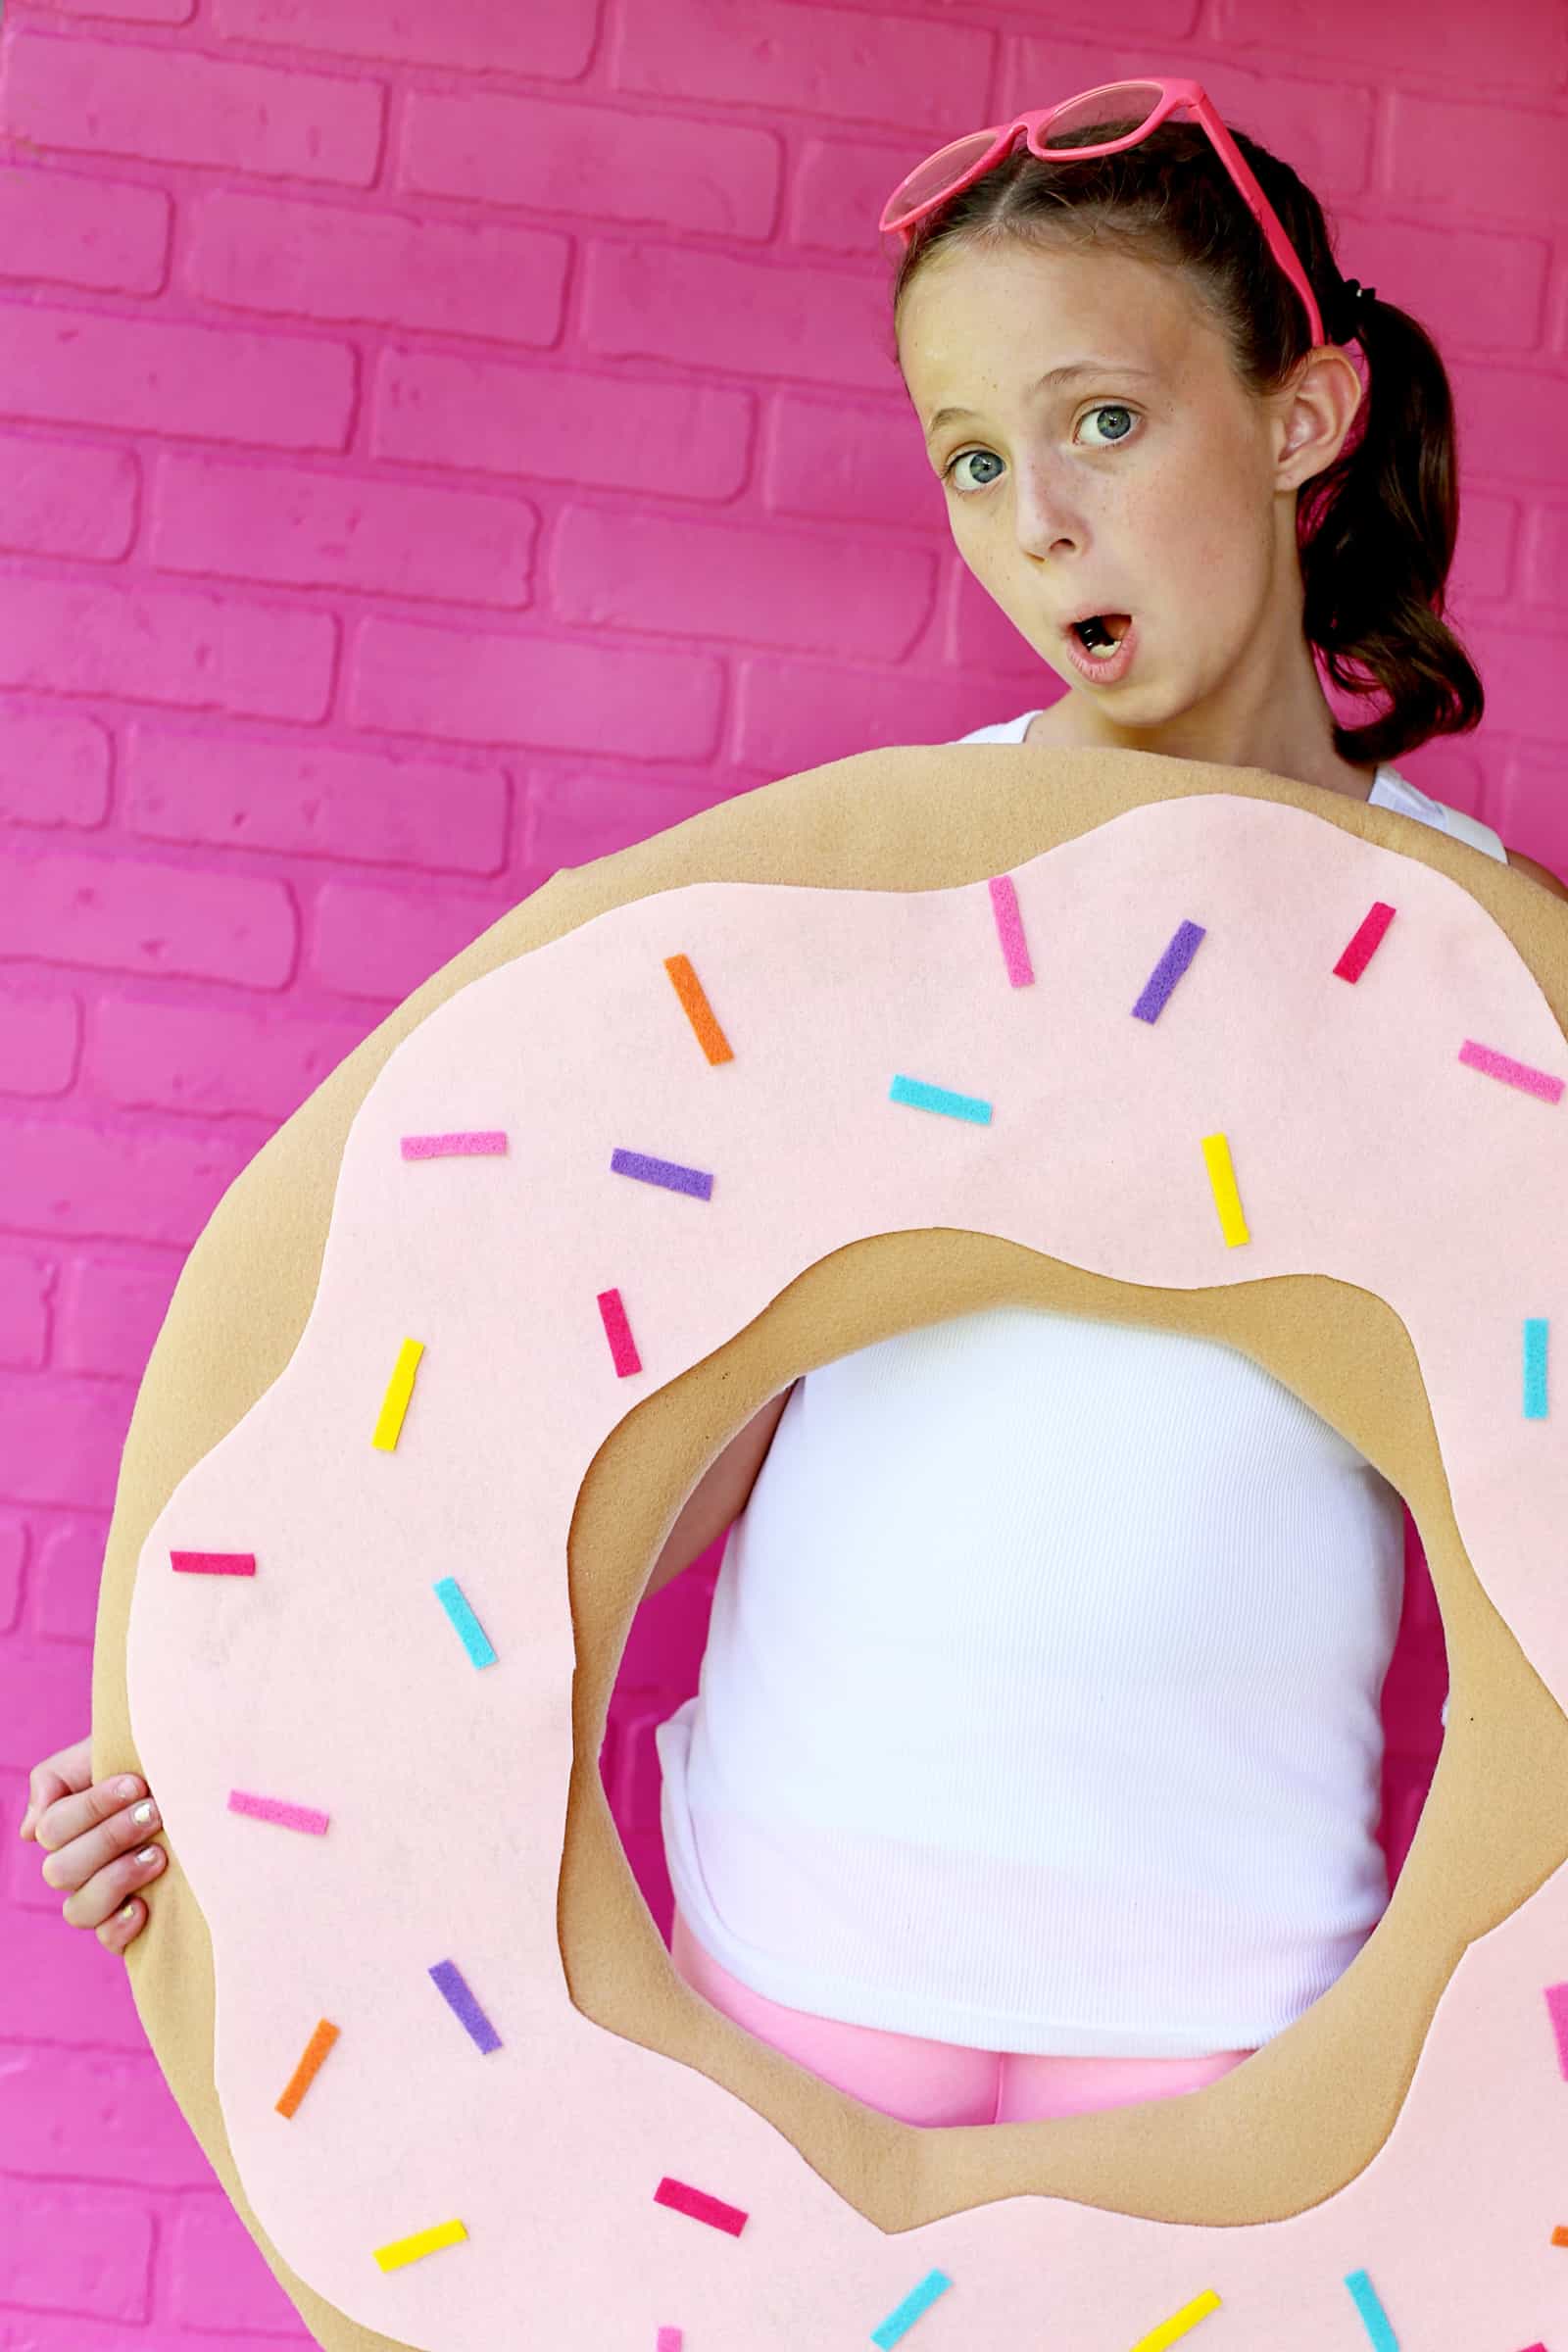 Amazing Halloween Costume - Sprinkle Donut